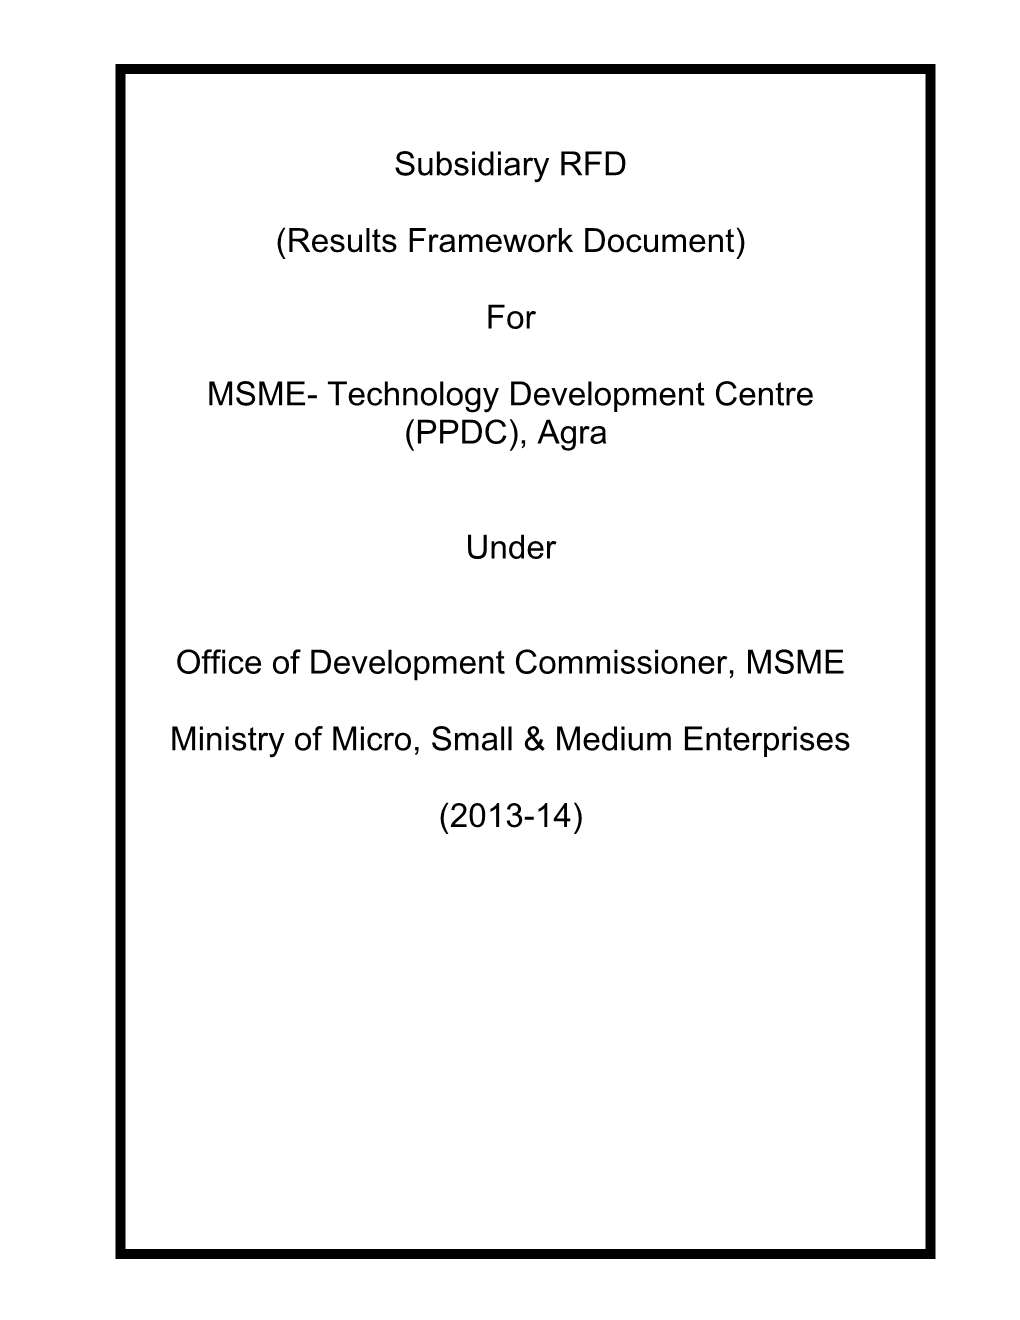 MSME- Technology Development Centre